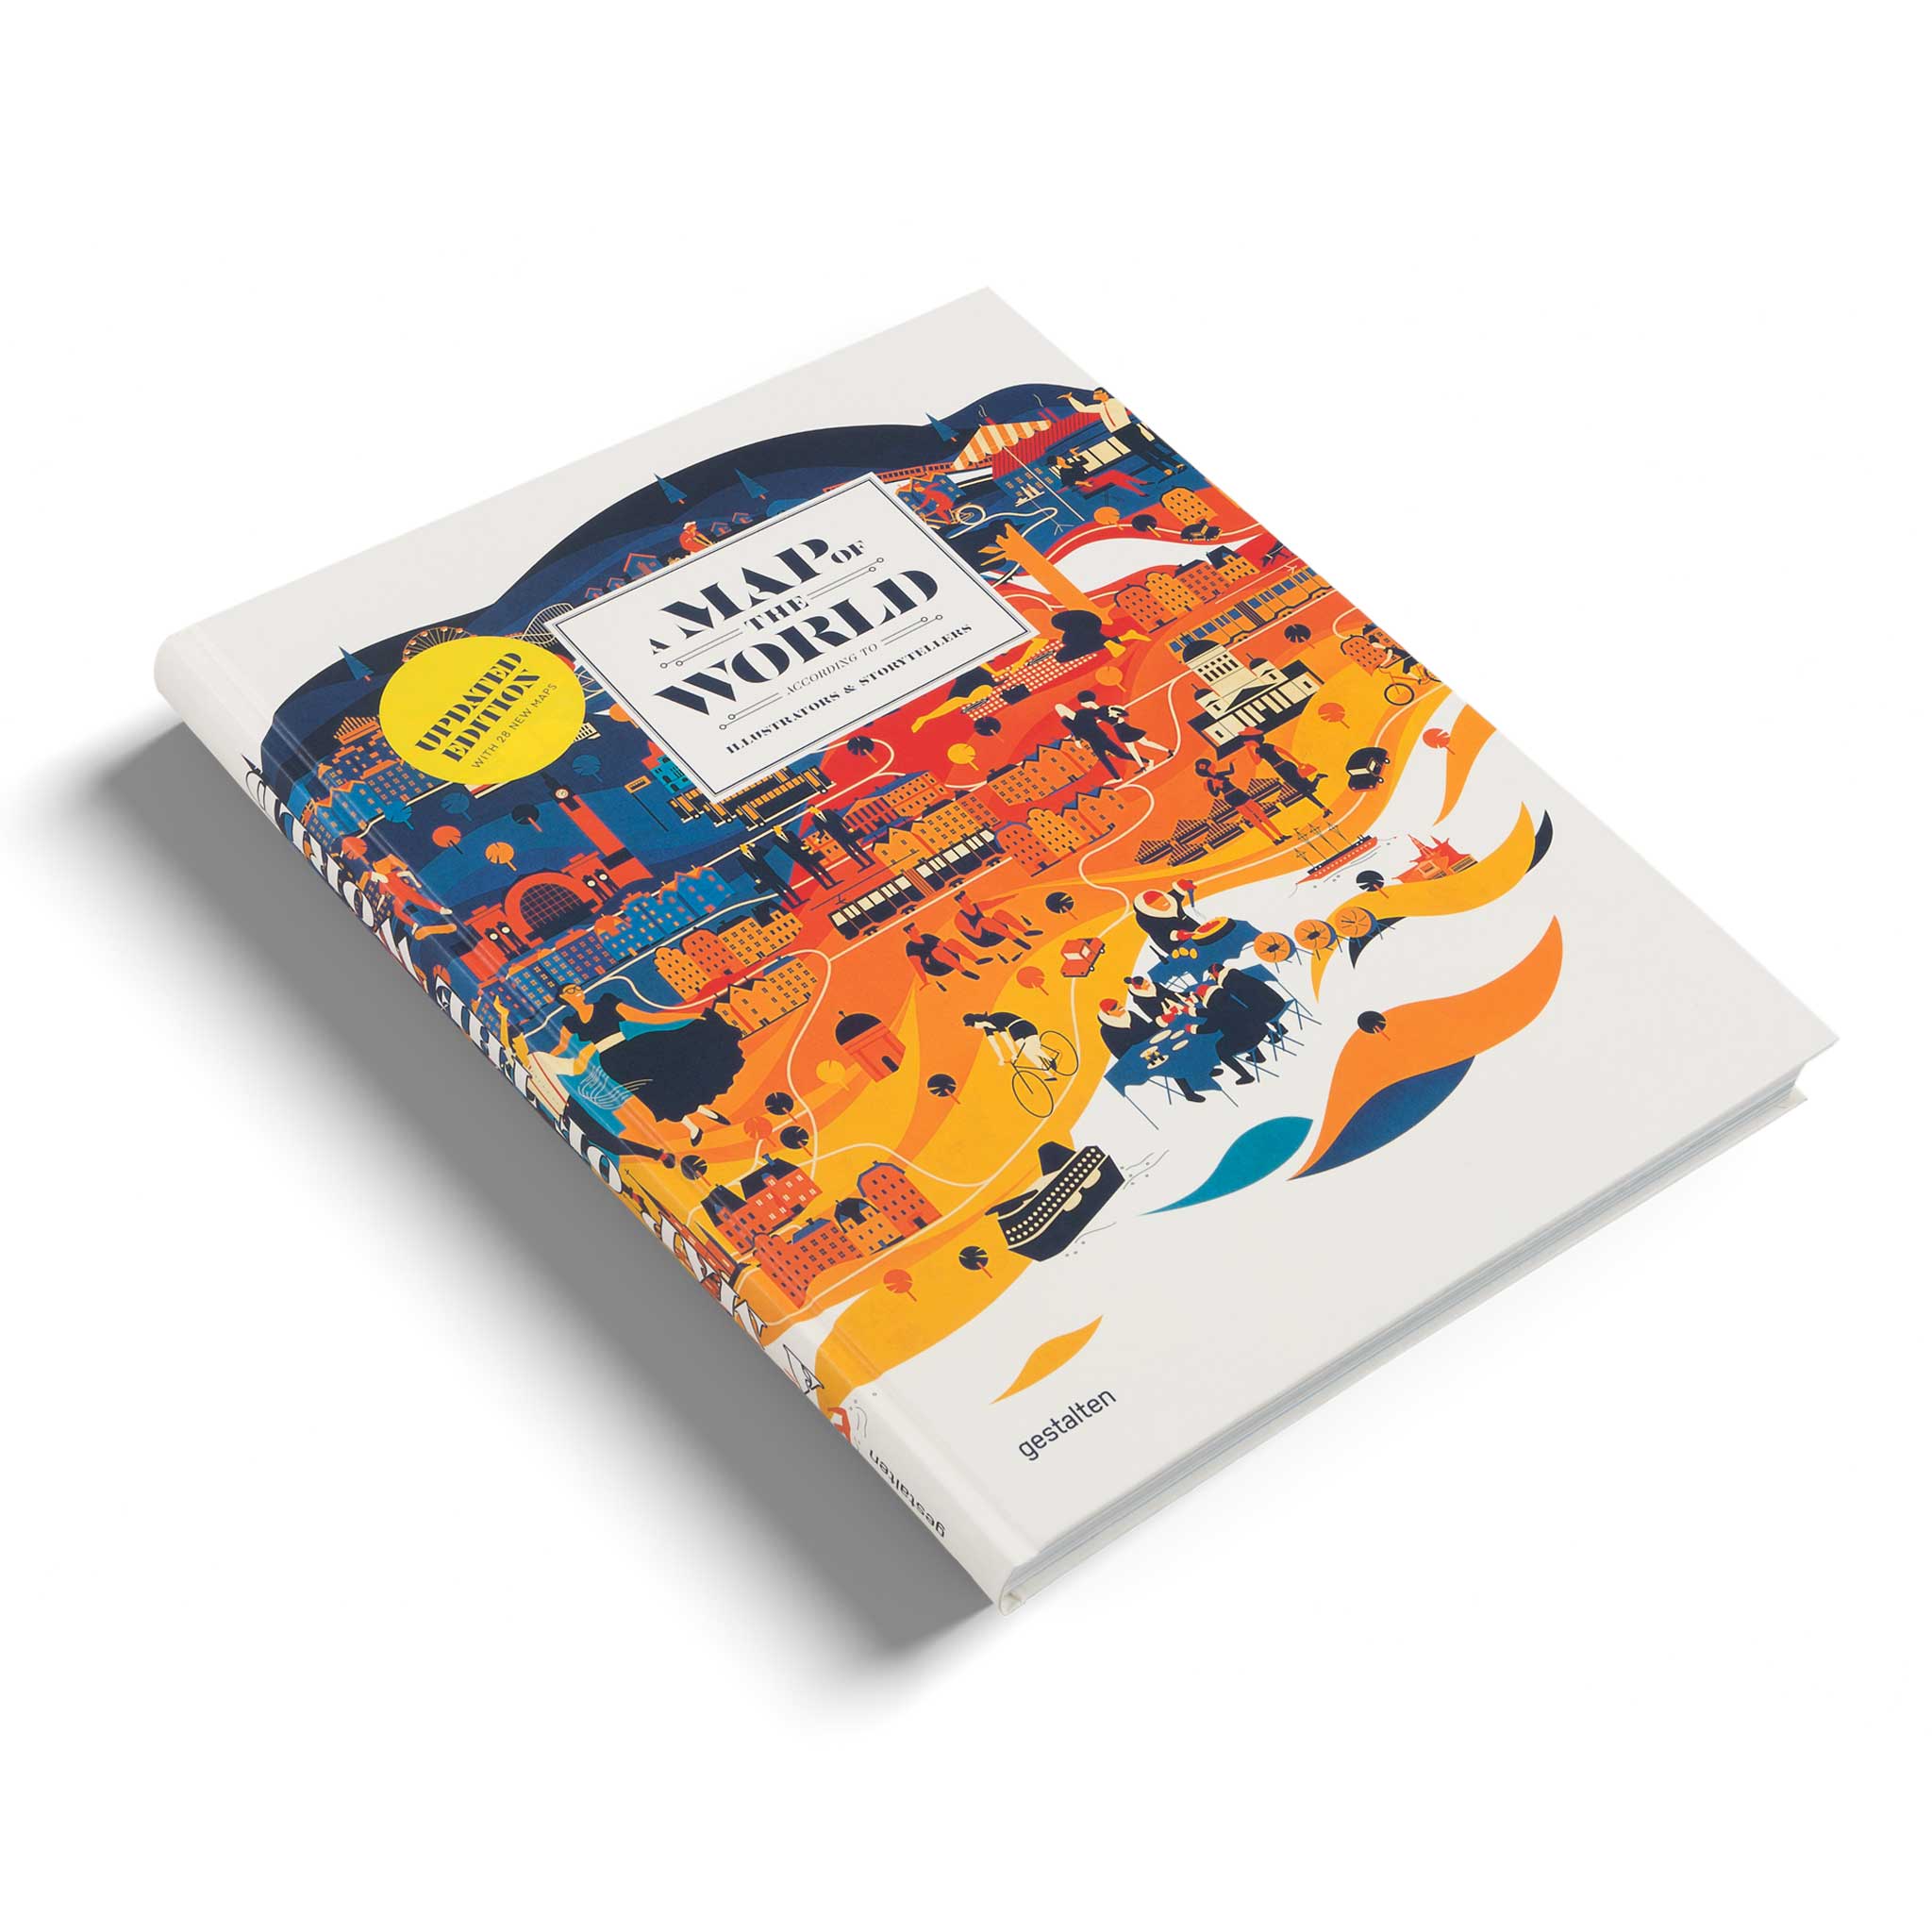 A MAP OF THE WORLD | BOOK | Updated Edition | Gestalten Verlag